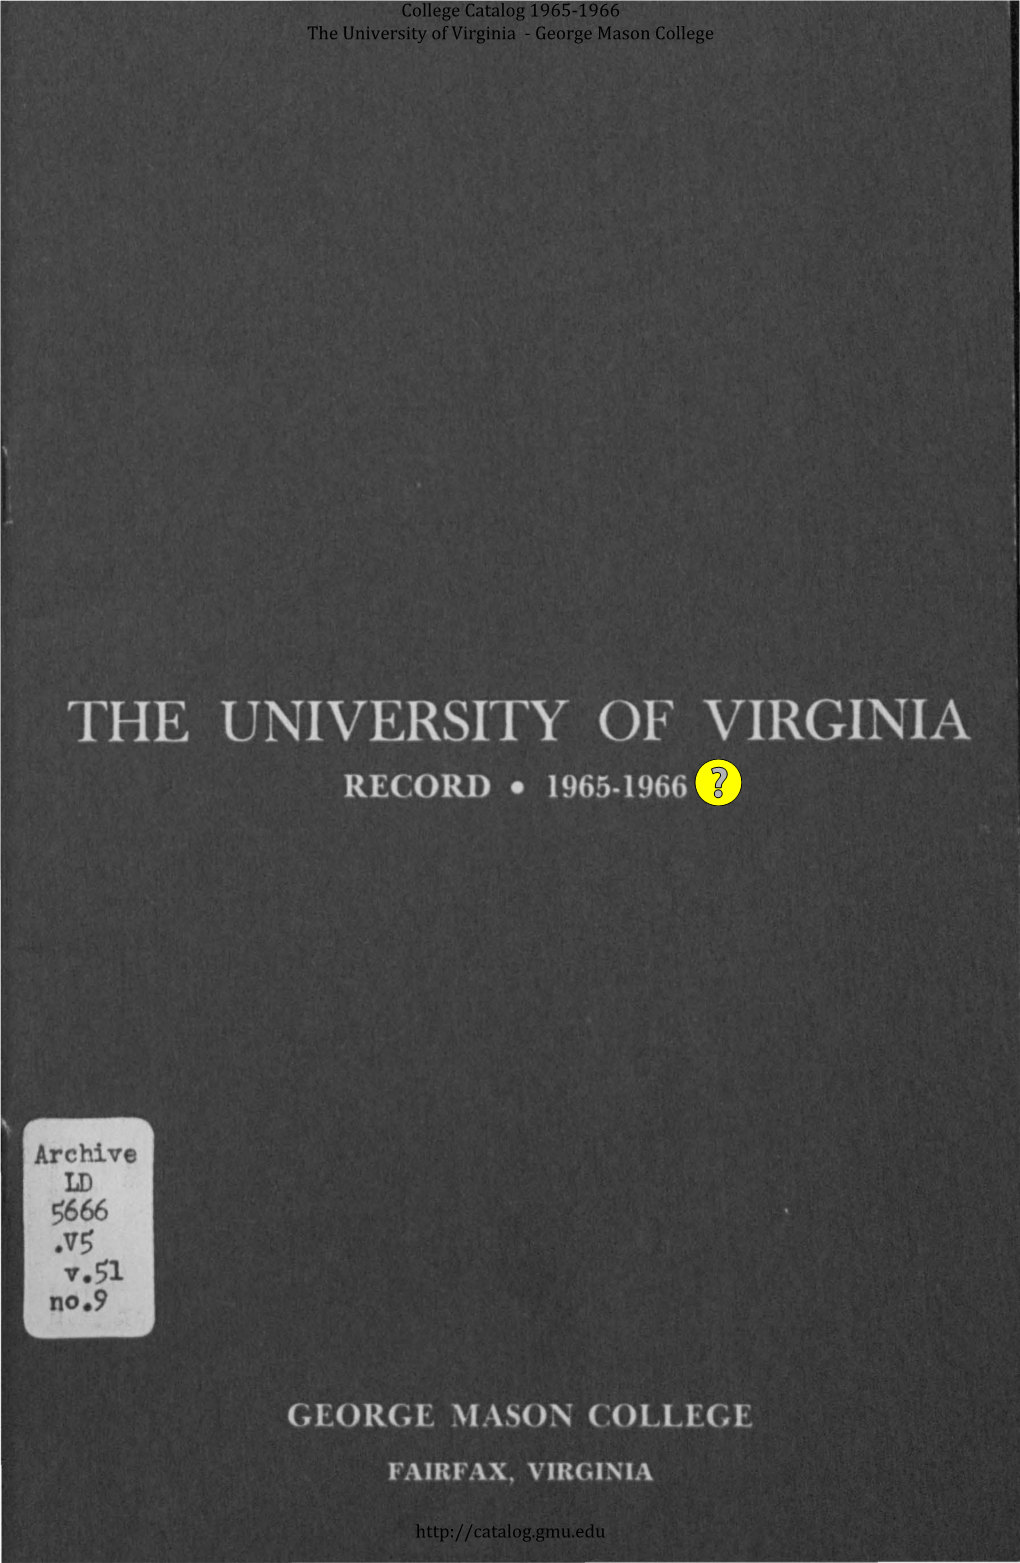 1965-1966 the University of Virginia - George Mason